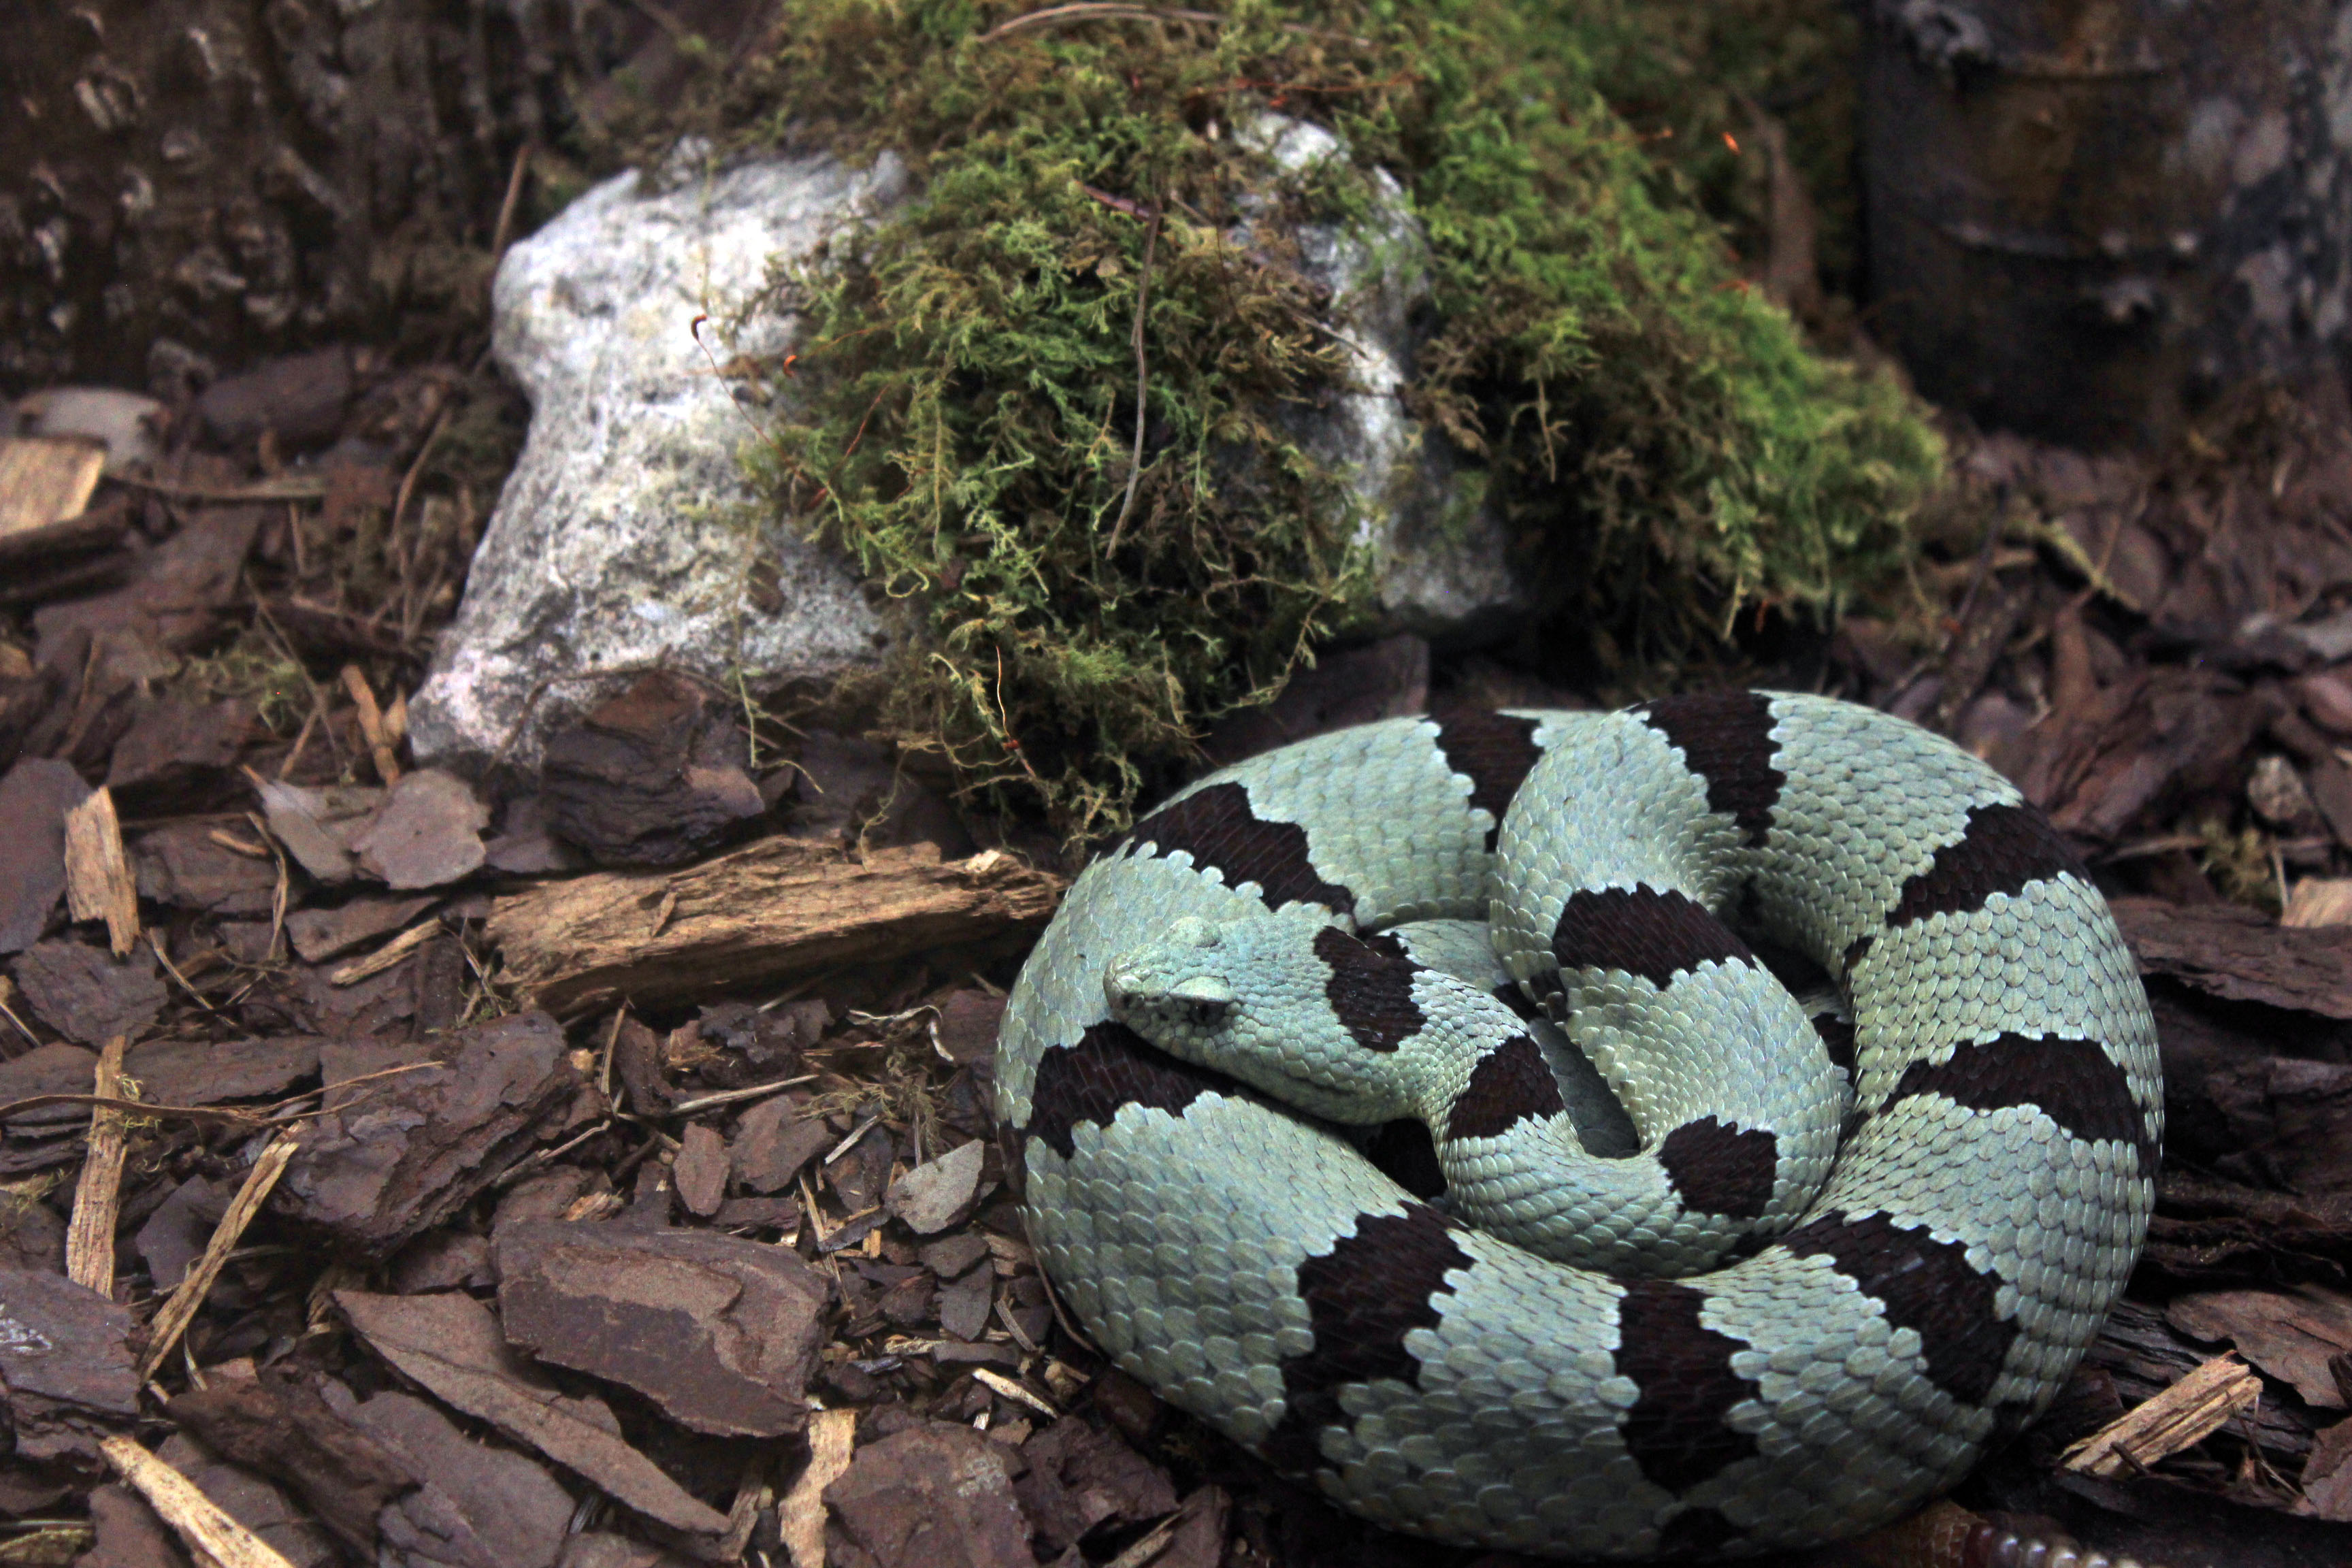 File:Gfp-banded-rock-rattlesnake.jpg - Wikimedia Commons